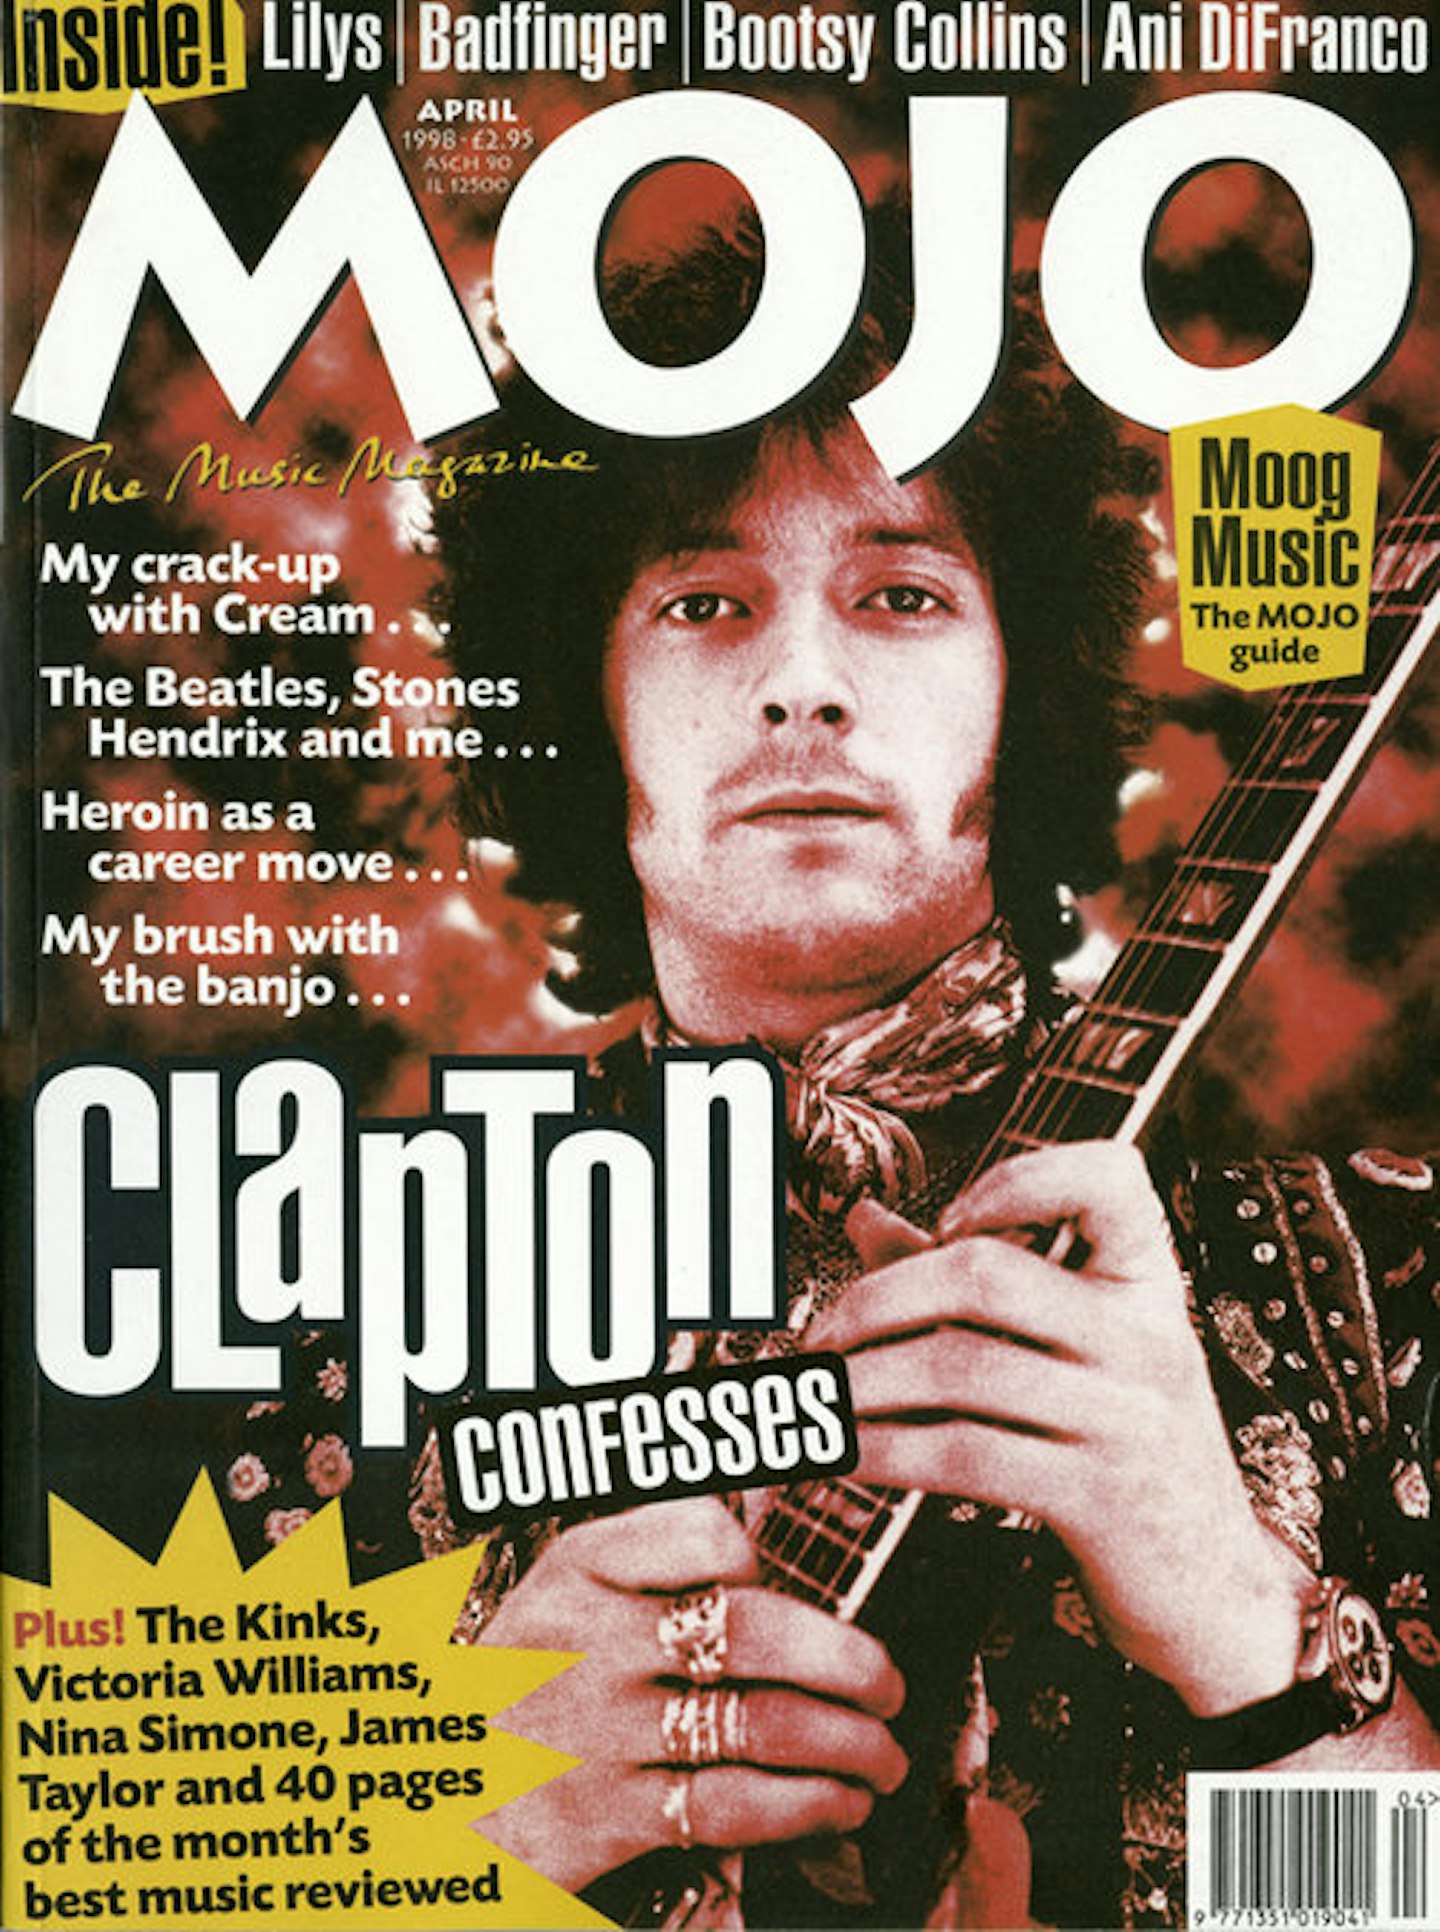 MOJO Issue 53 / April 1998